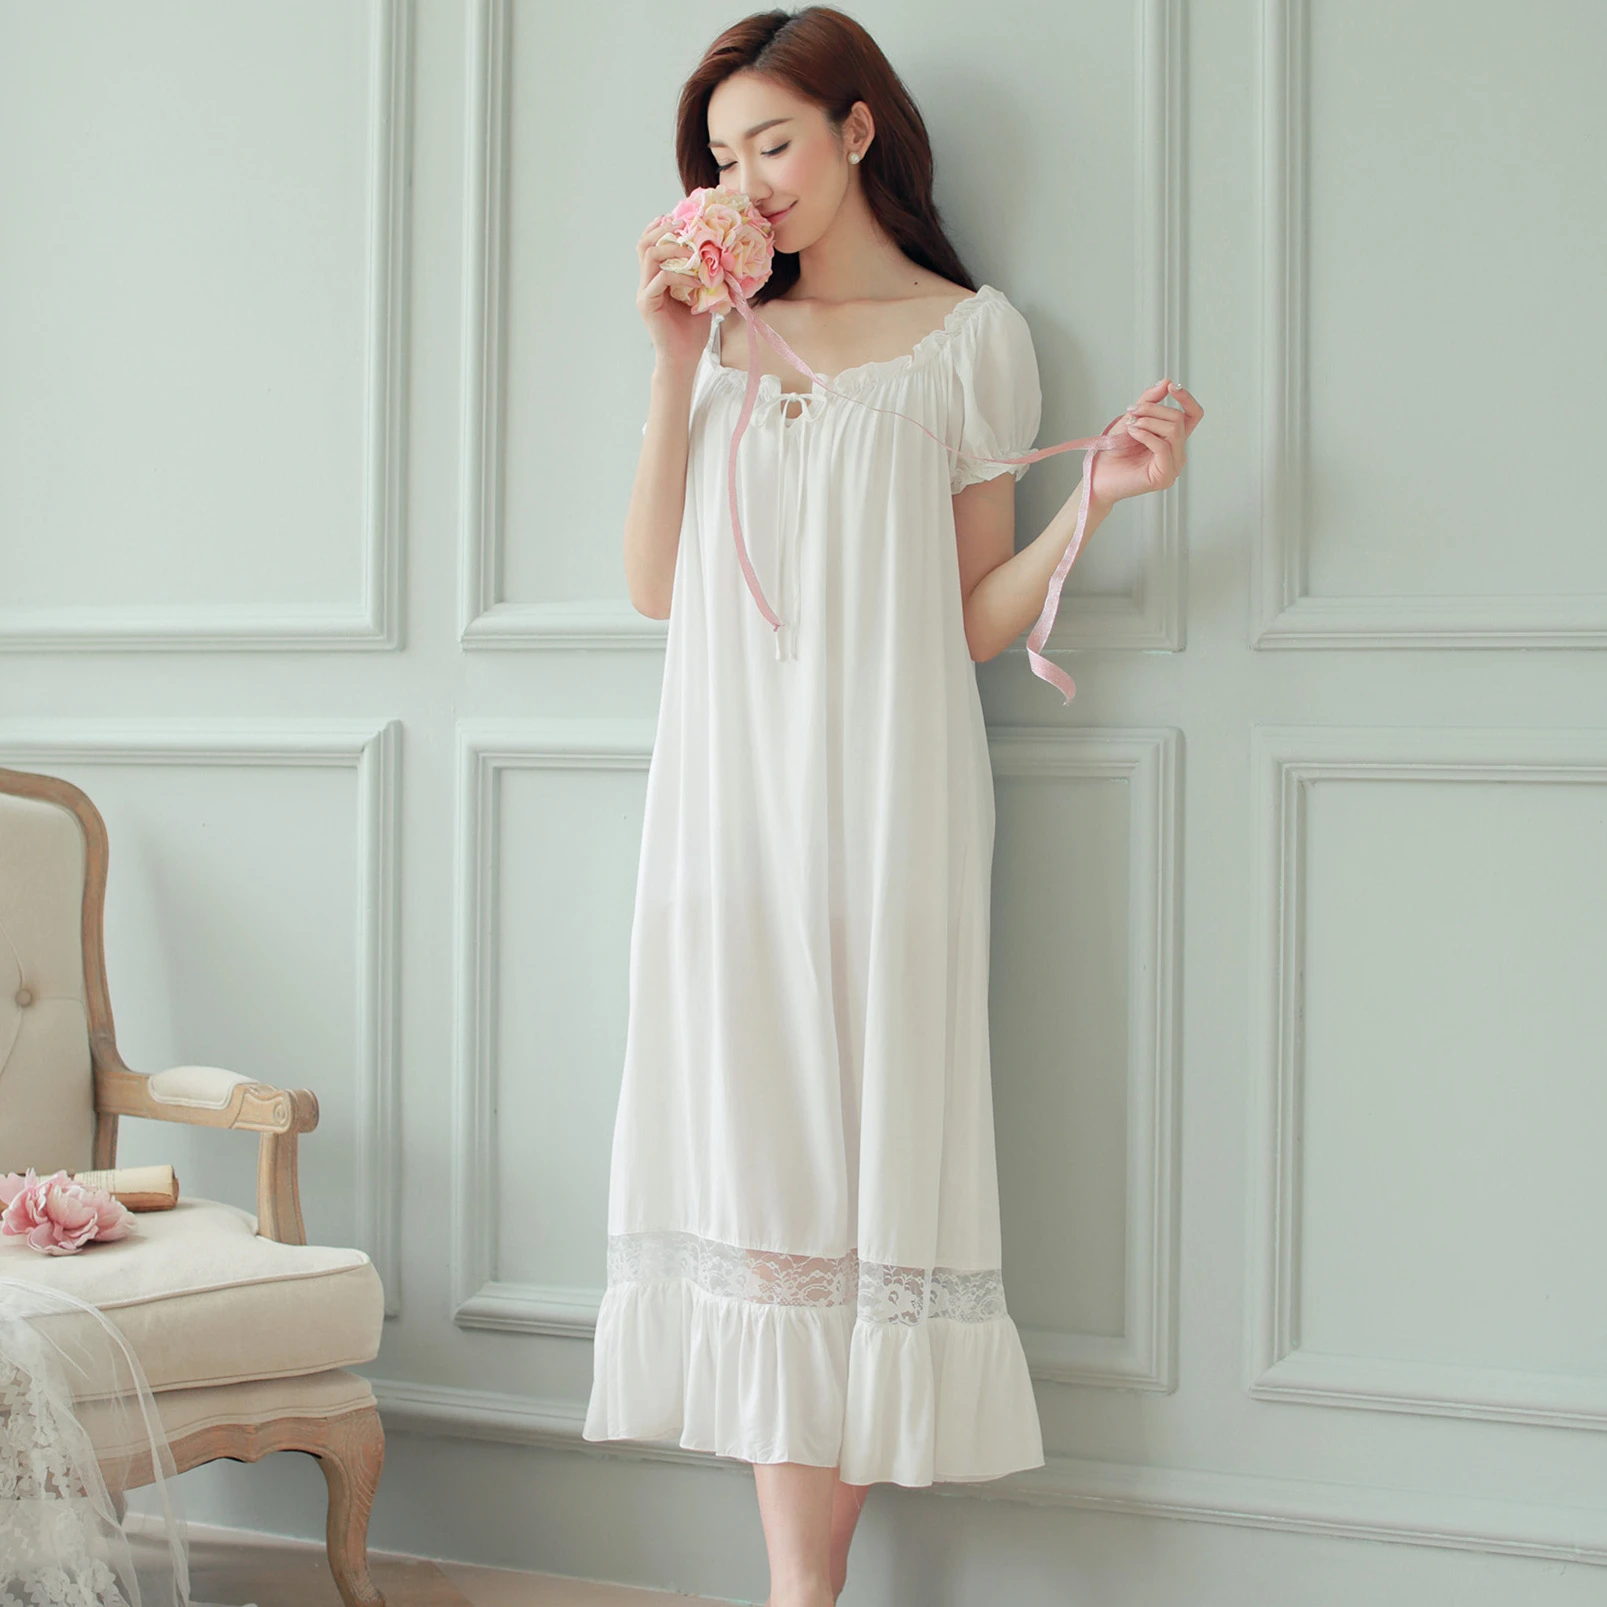 Summer Women Nightgowns White Cotton Short Sleeve Nightdress Vintage Long Sleepwear Lace Sexy Nightwear Home Night Dress 2020